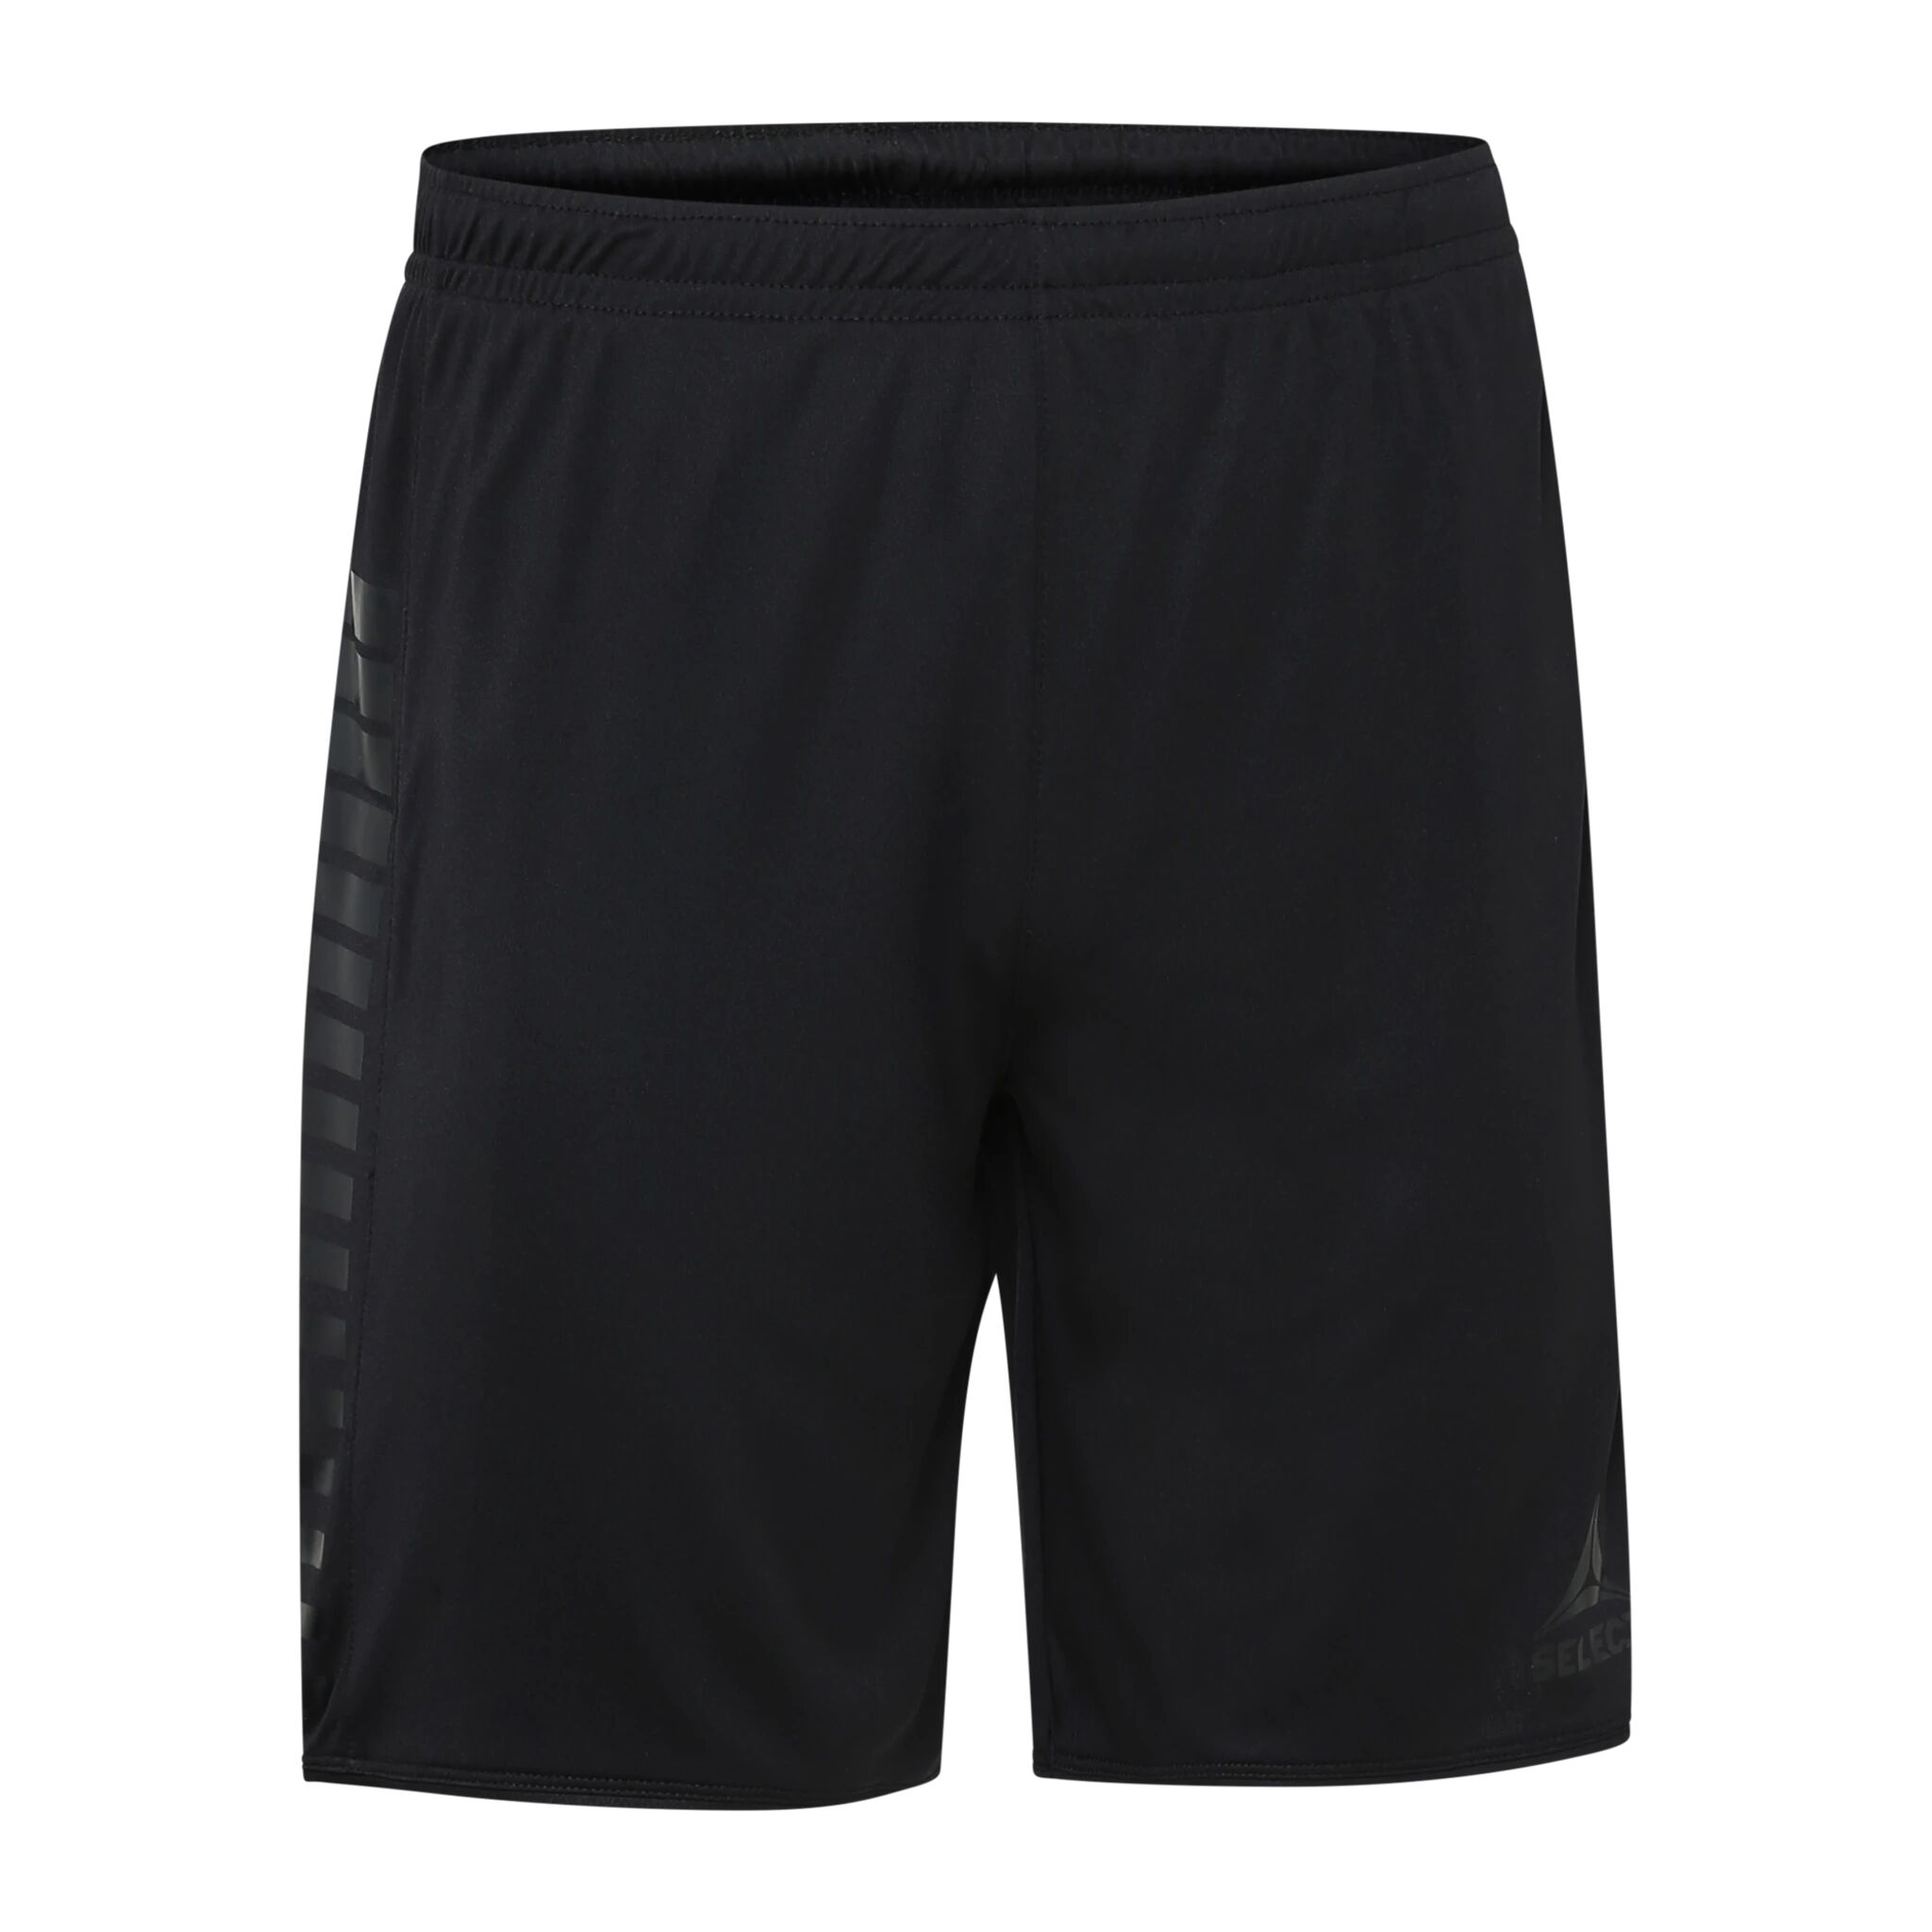 Select Player shorts Argentina, shorts Junior/Senior 140 BLACK/BLACK